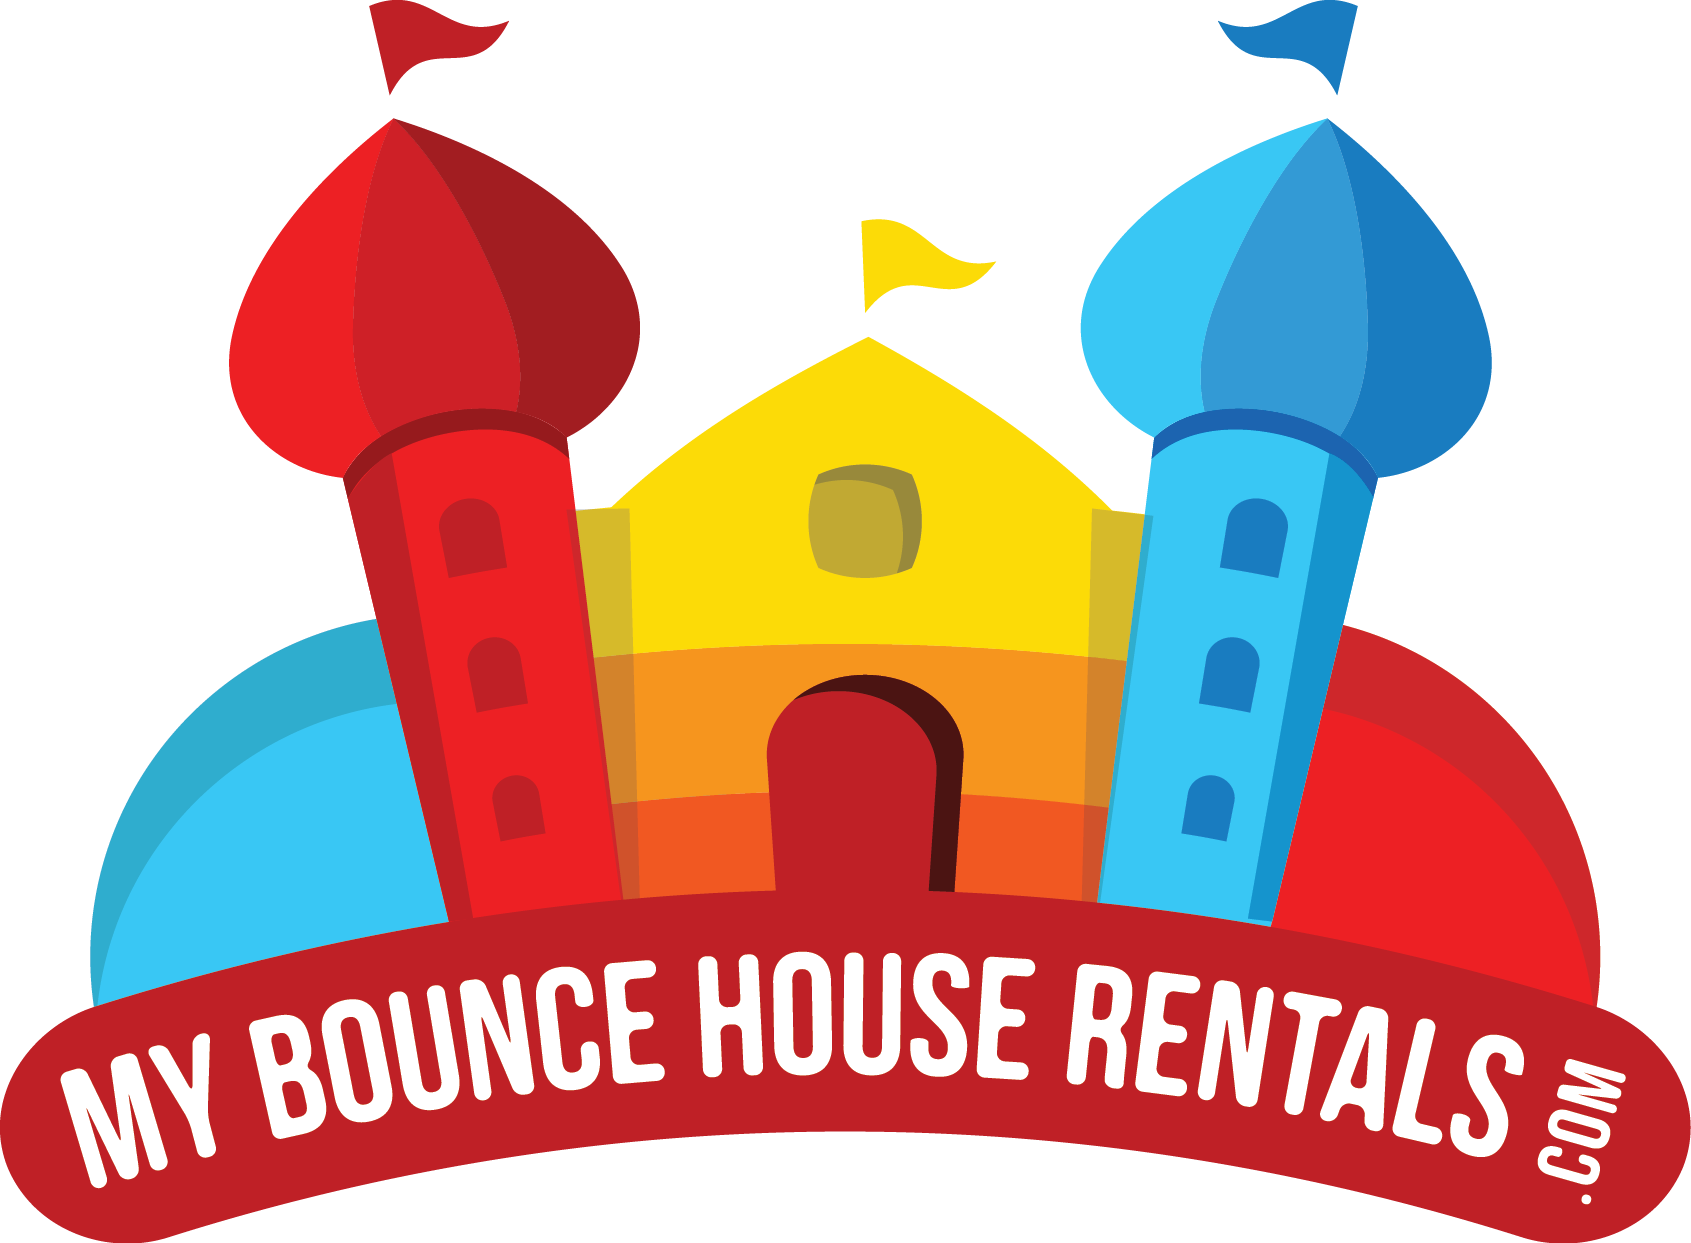 My bounce house rentals of Southampton's Logo